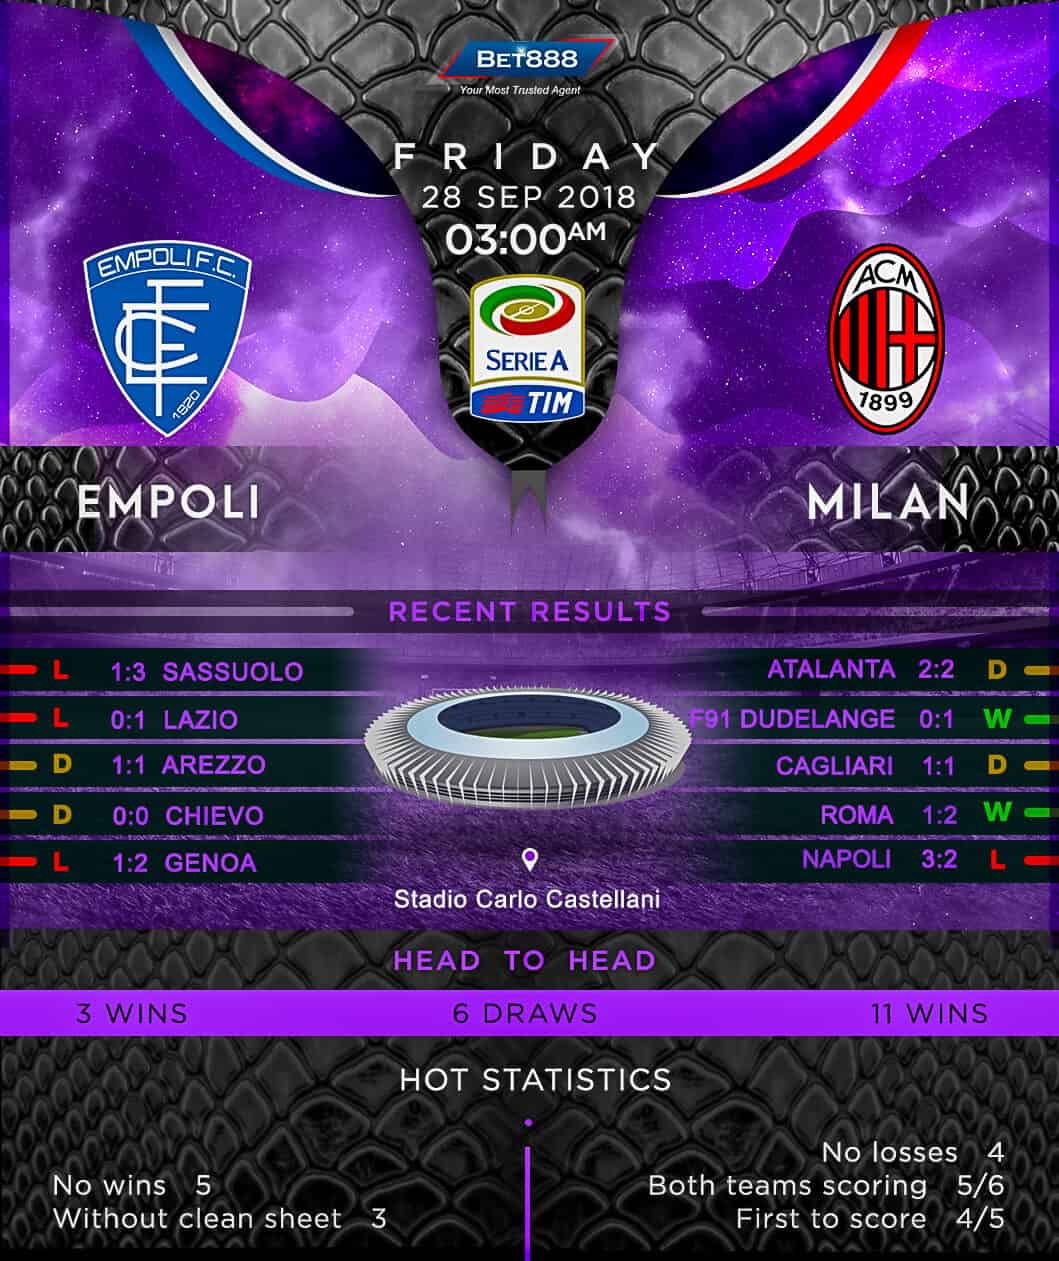 Empoli vs AC Milan 28/09/18